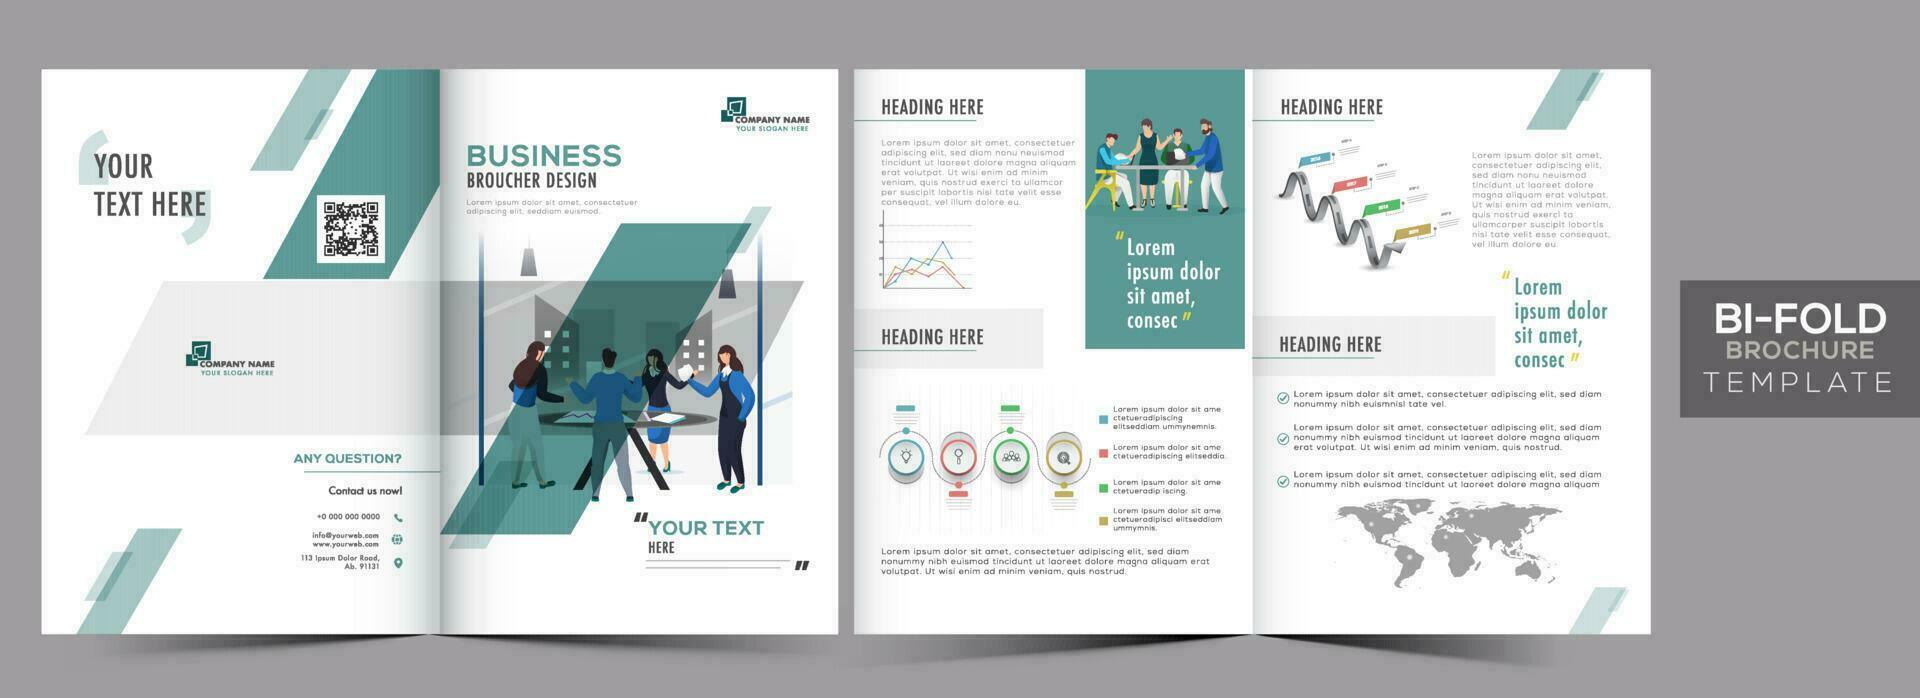 frente y espalda ver de doble folleto modelo diseño o anual reporte para negocio Progreso concepto. vector